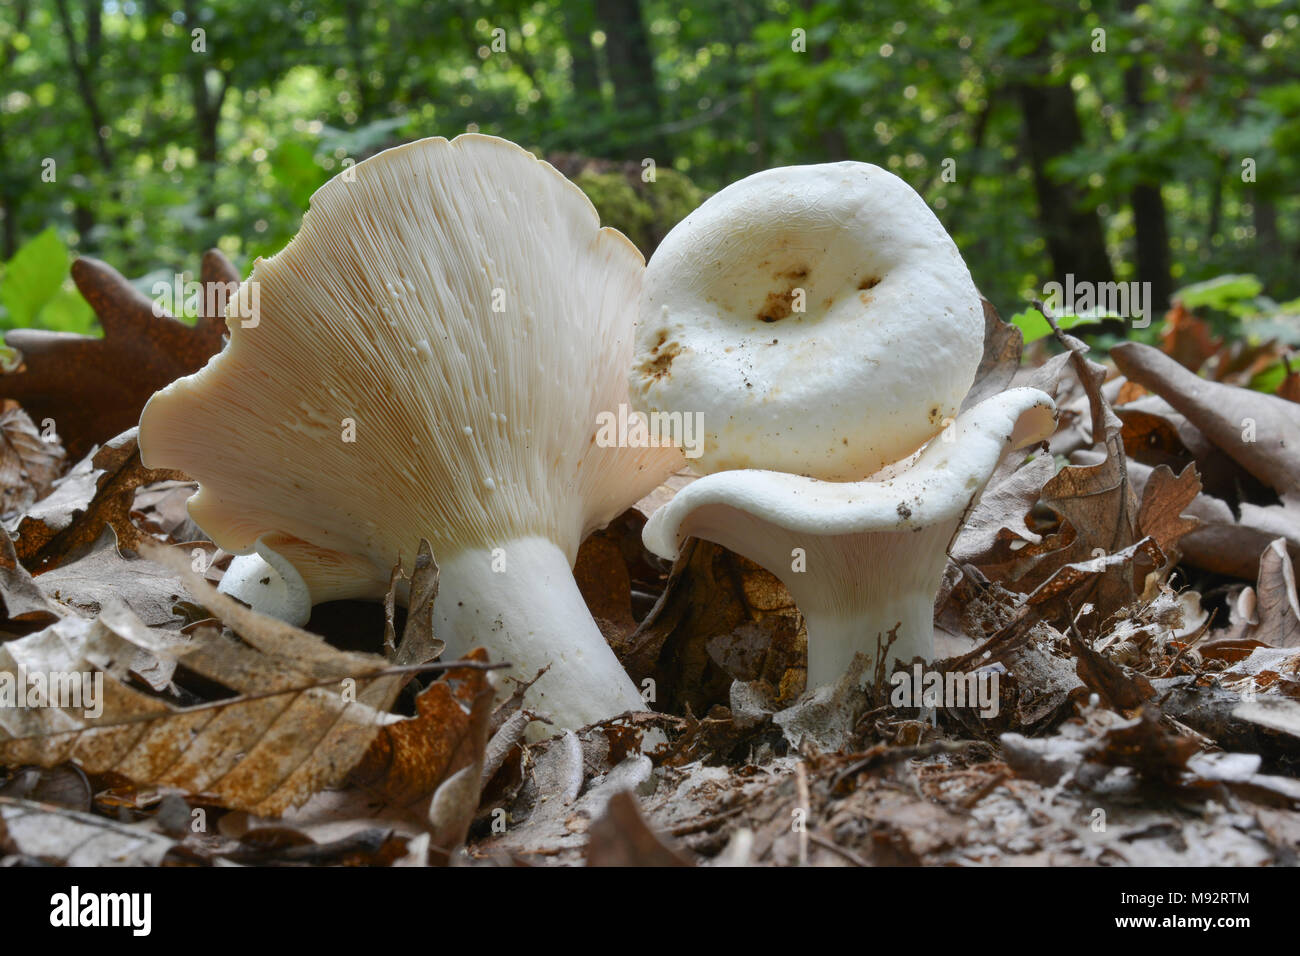 Lactifluus piperatus or Lactarius piperatus, commonly known as the Peppery milk-cap, semi-edible  wild mushroom in natural habitat; despite being edib Stock Photo